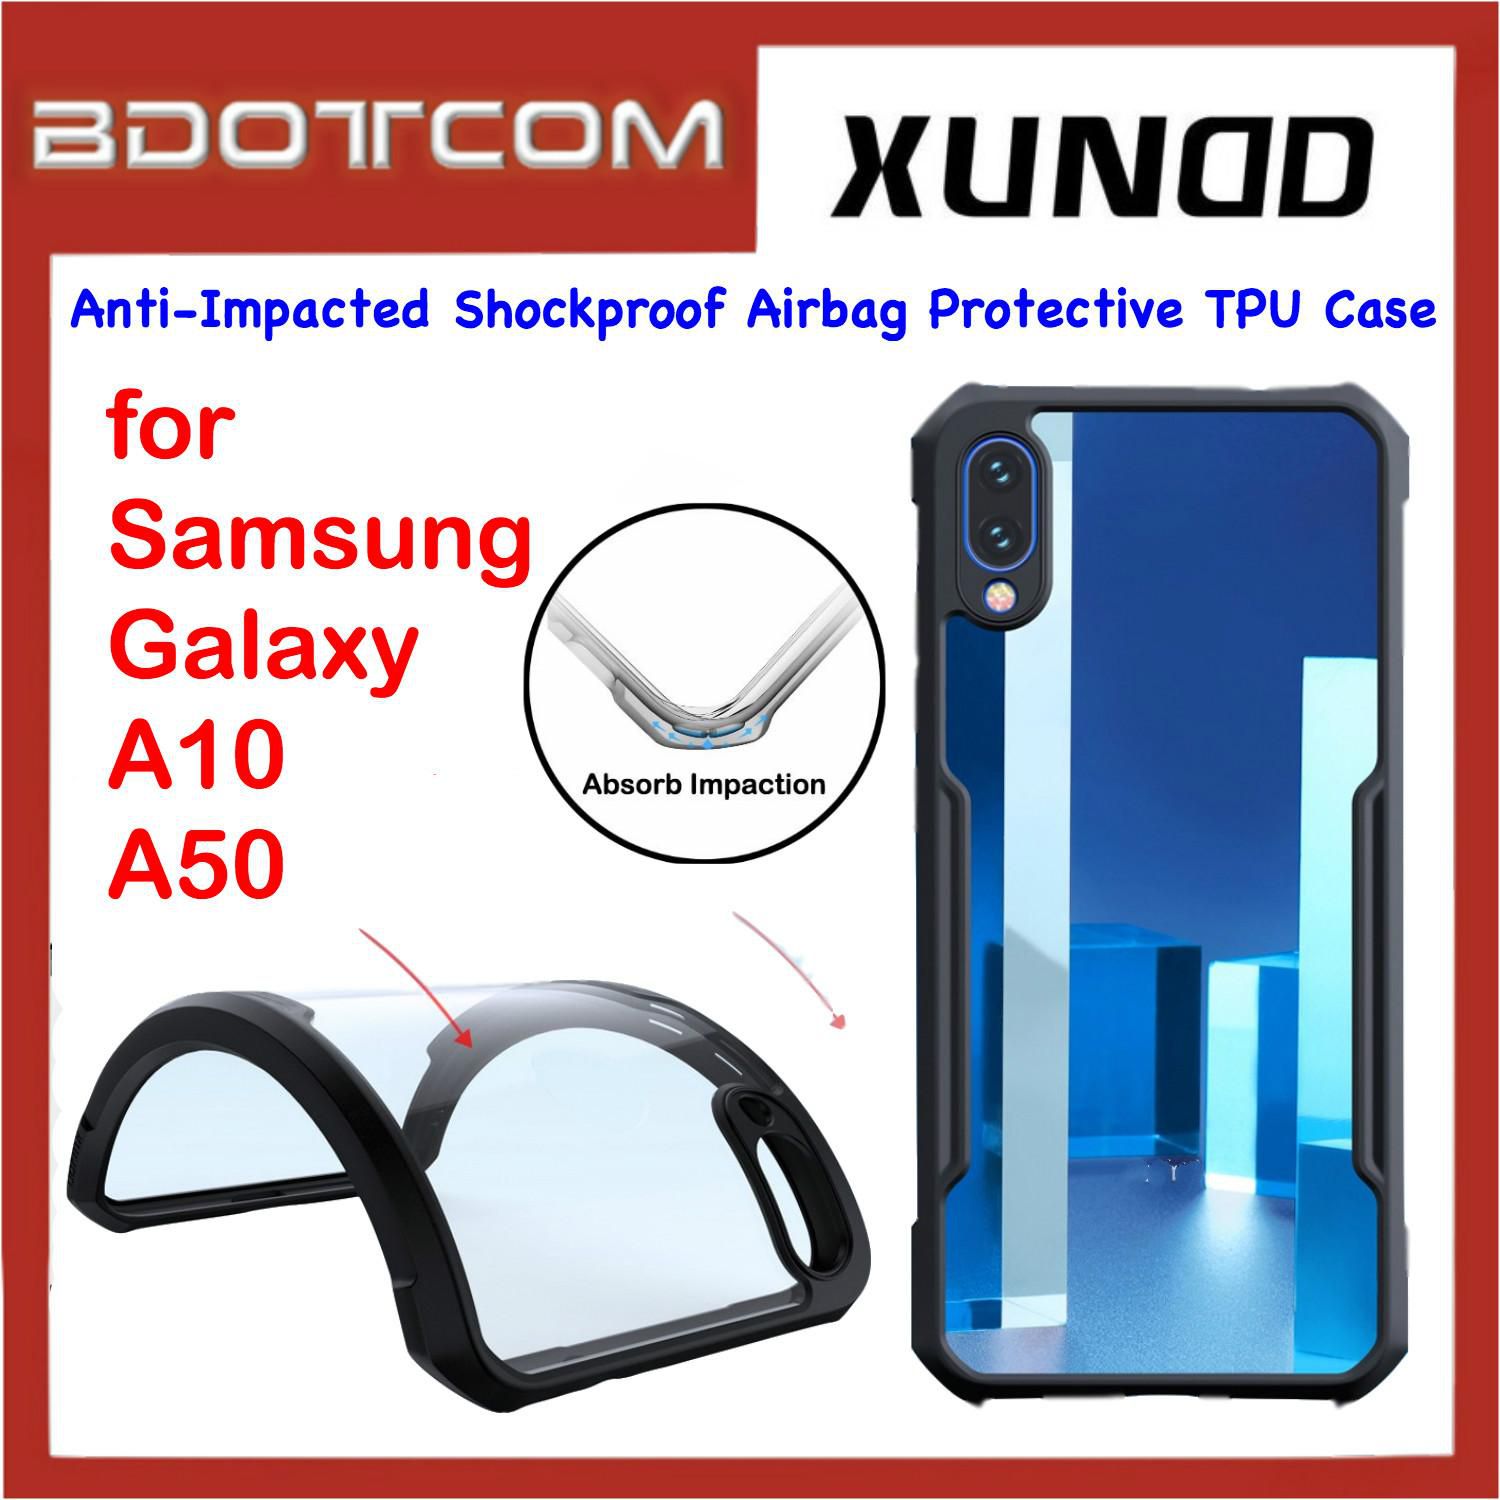 Xundd Beetle Anti-Impacted Samsung Galaxy A10 TPU Case (2 Types)